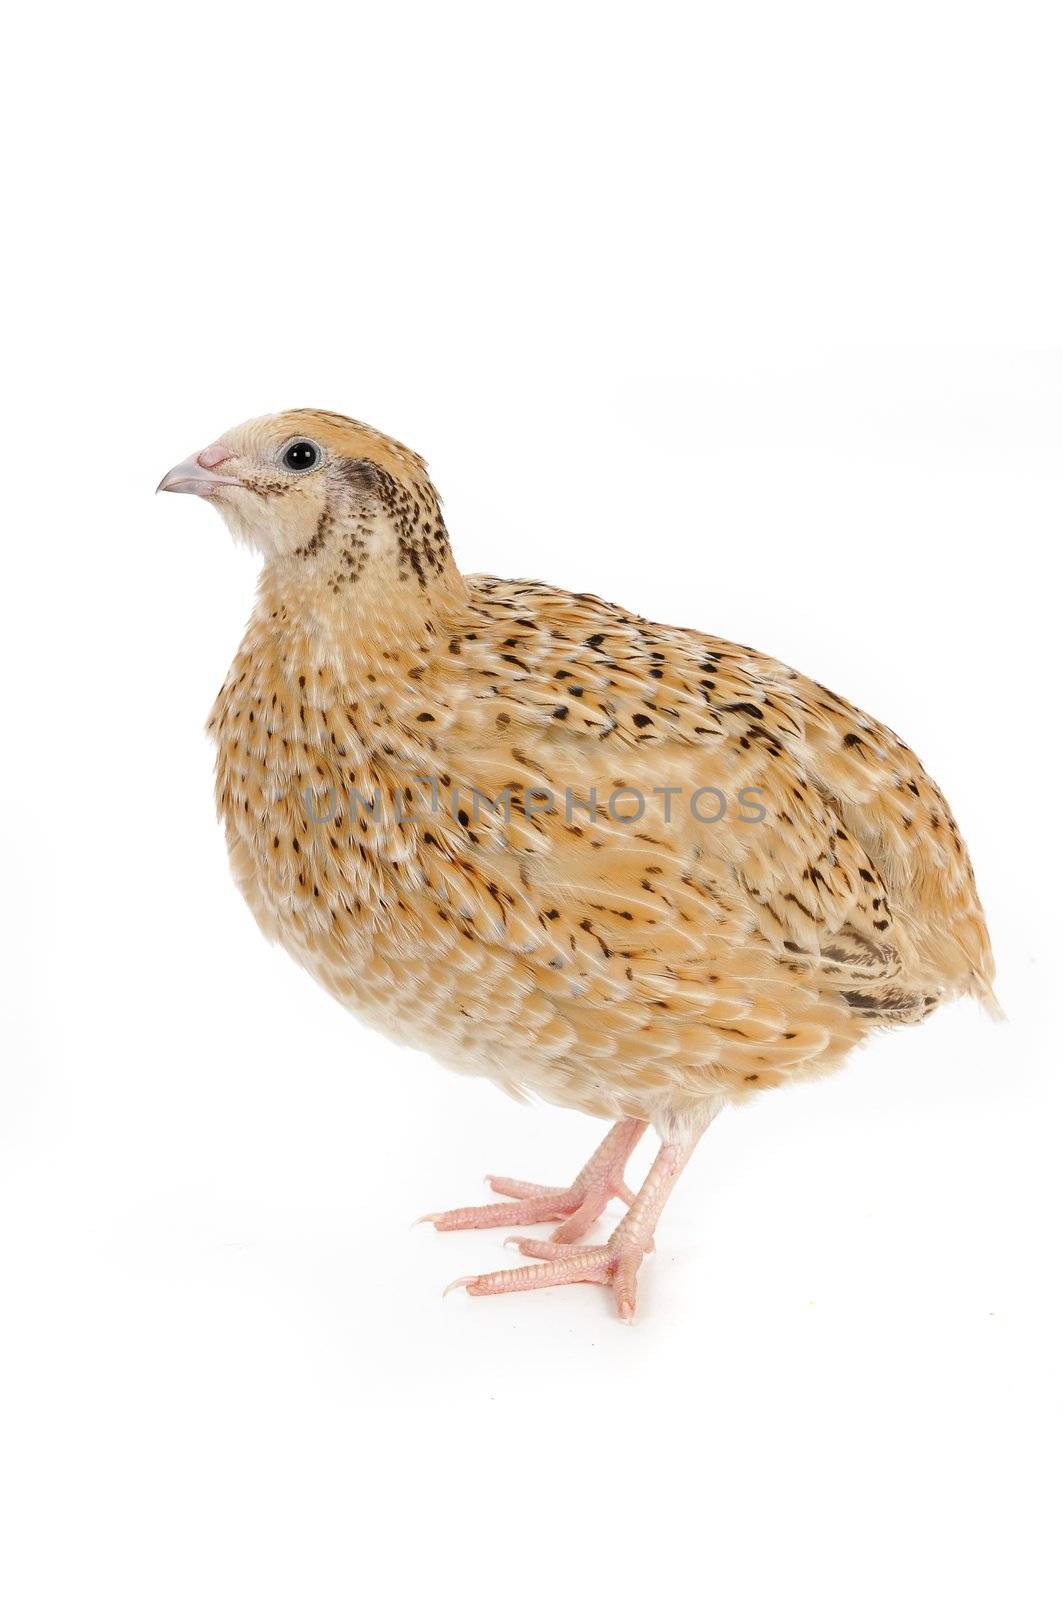  quail  by panbazil